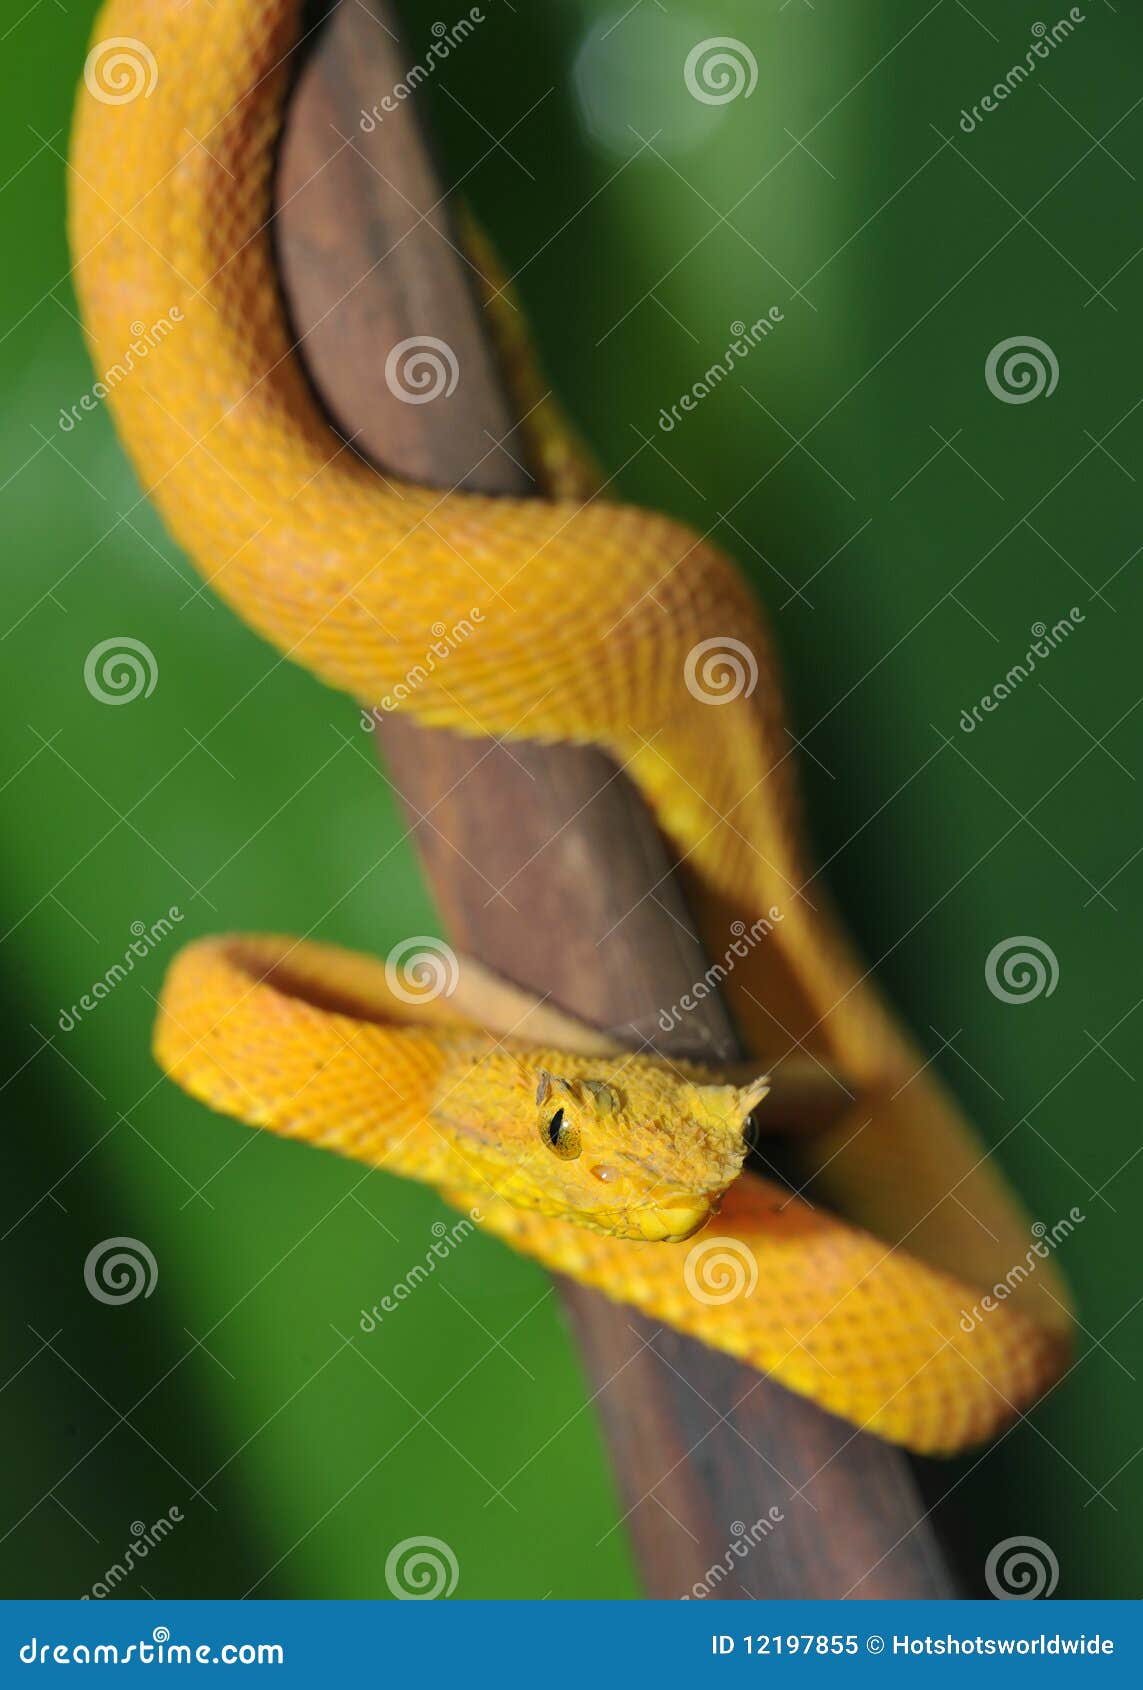 close up of venomous yellow eyelash pit viper